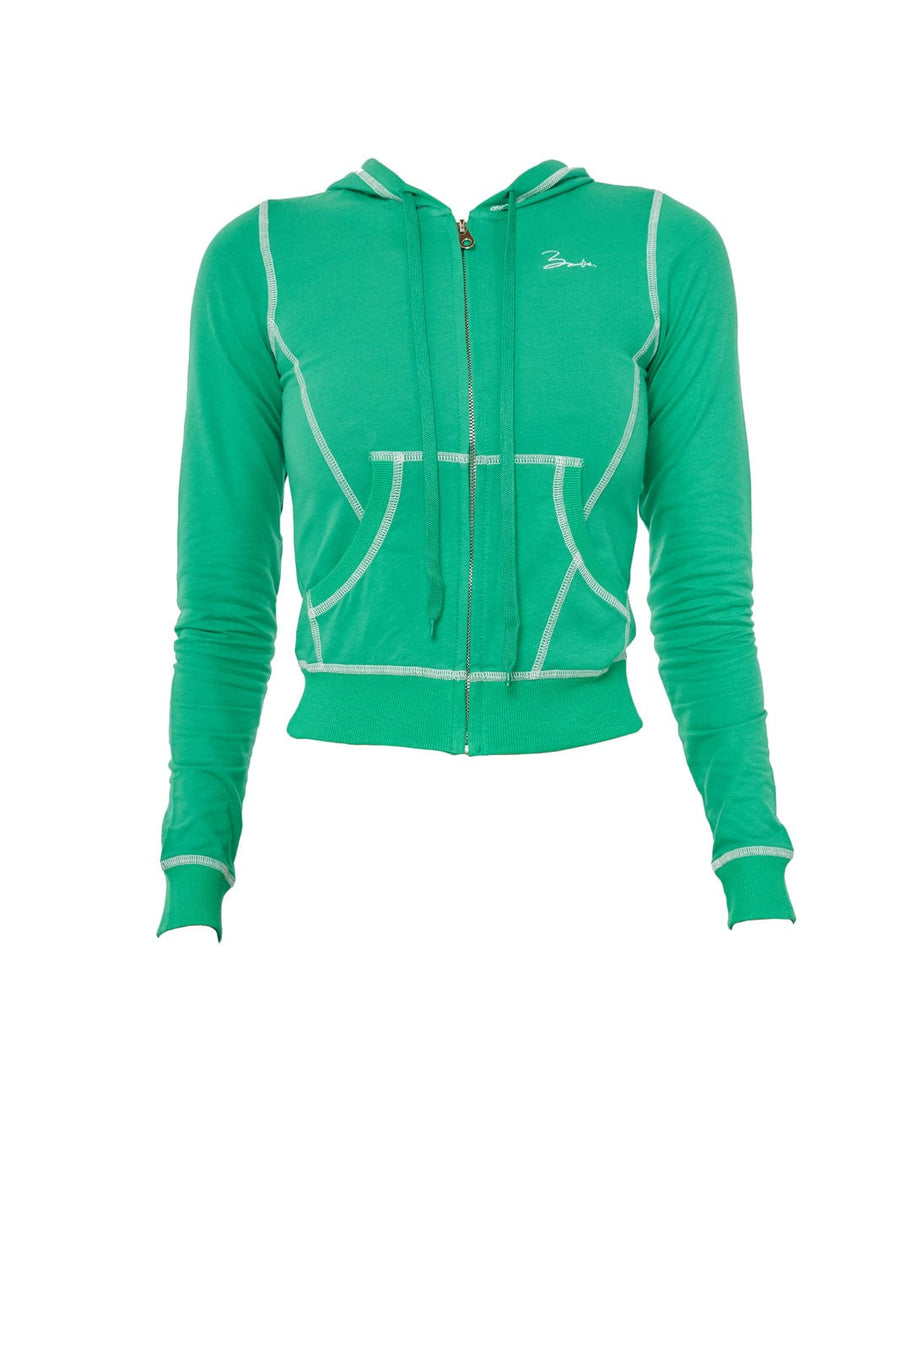 ESPRITE jacket- forest green  -  CLOTHING  -  B Ā M B A S W I M